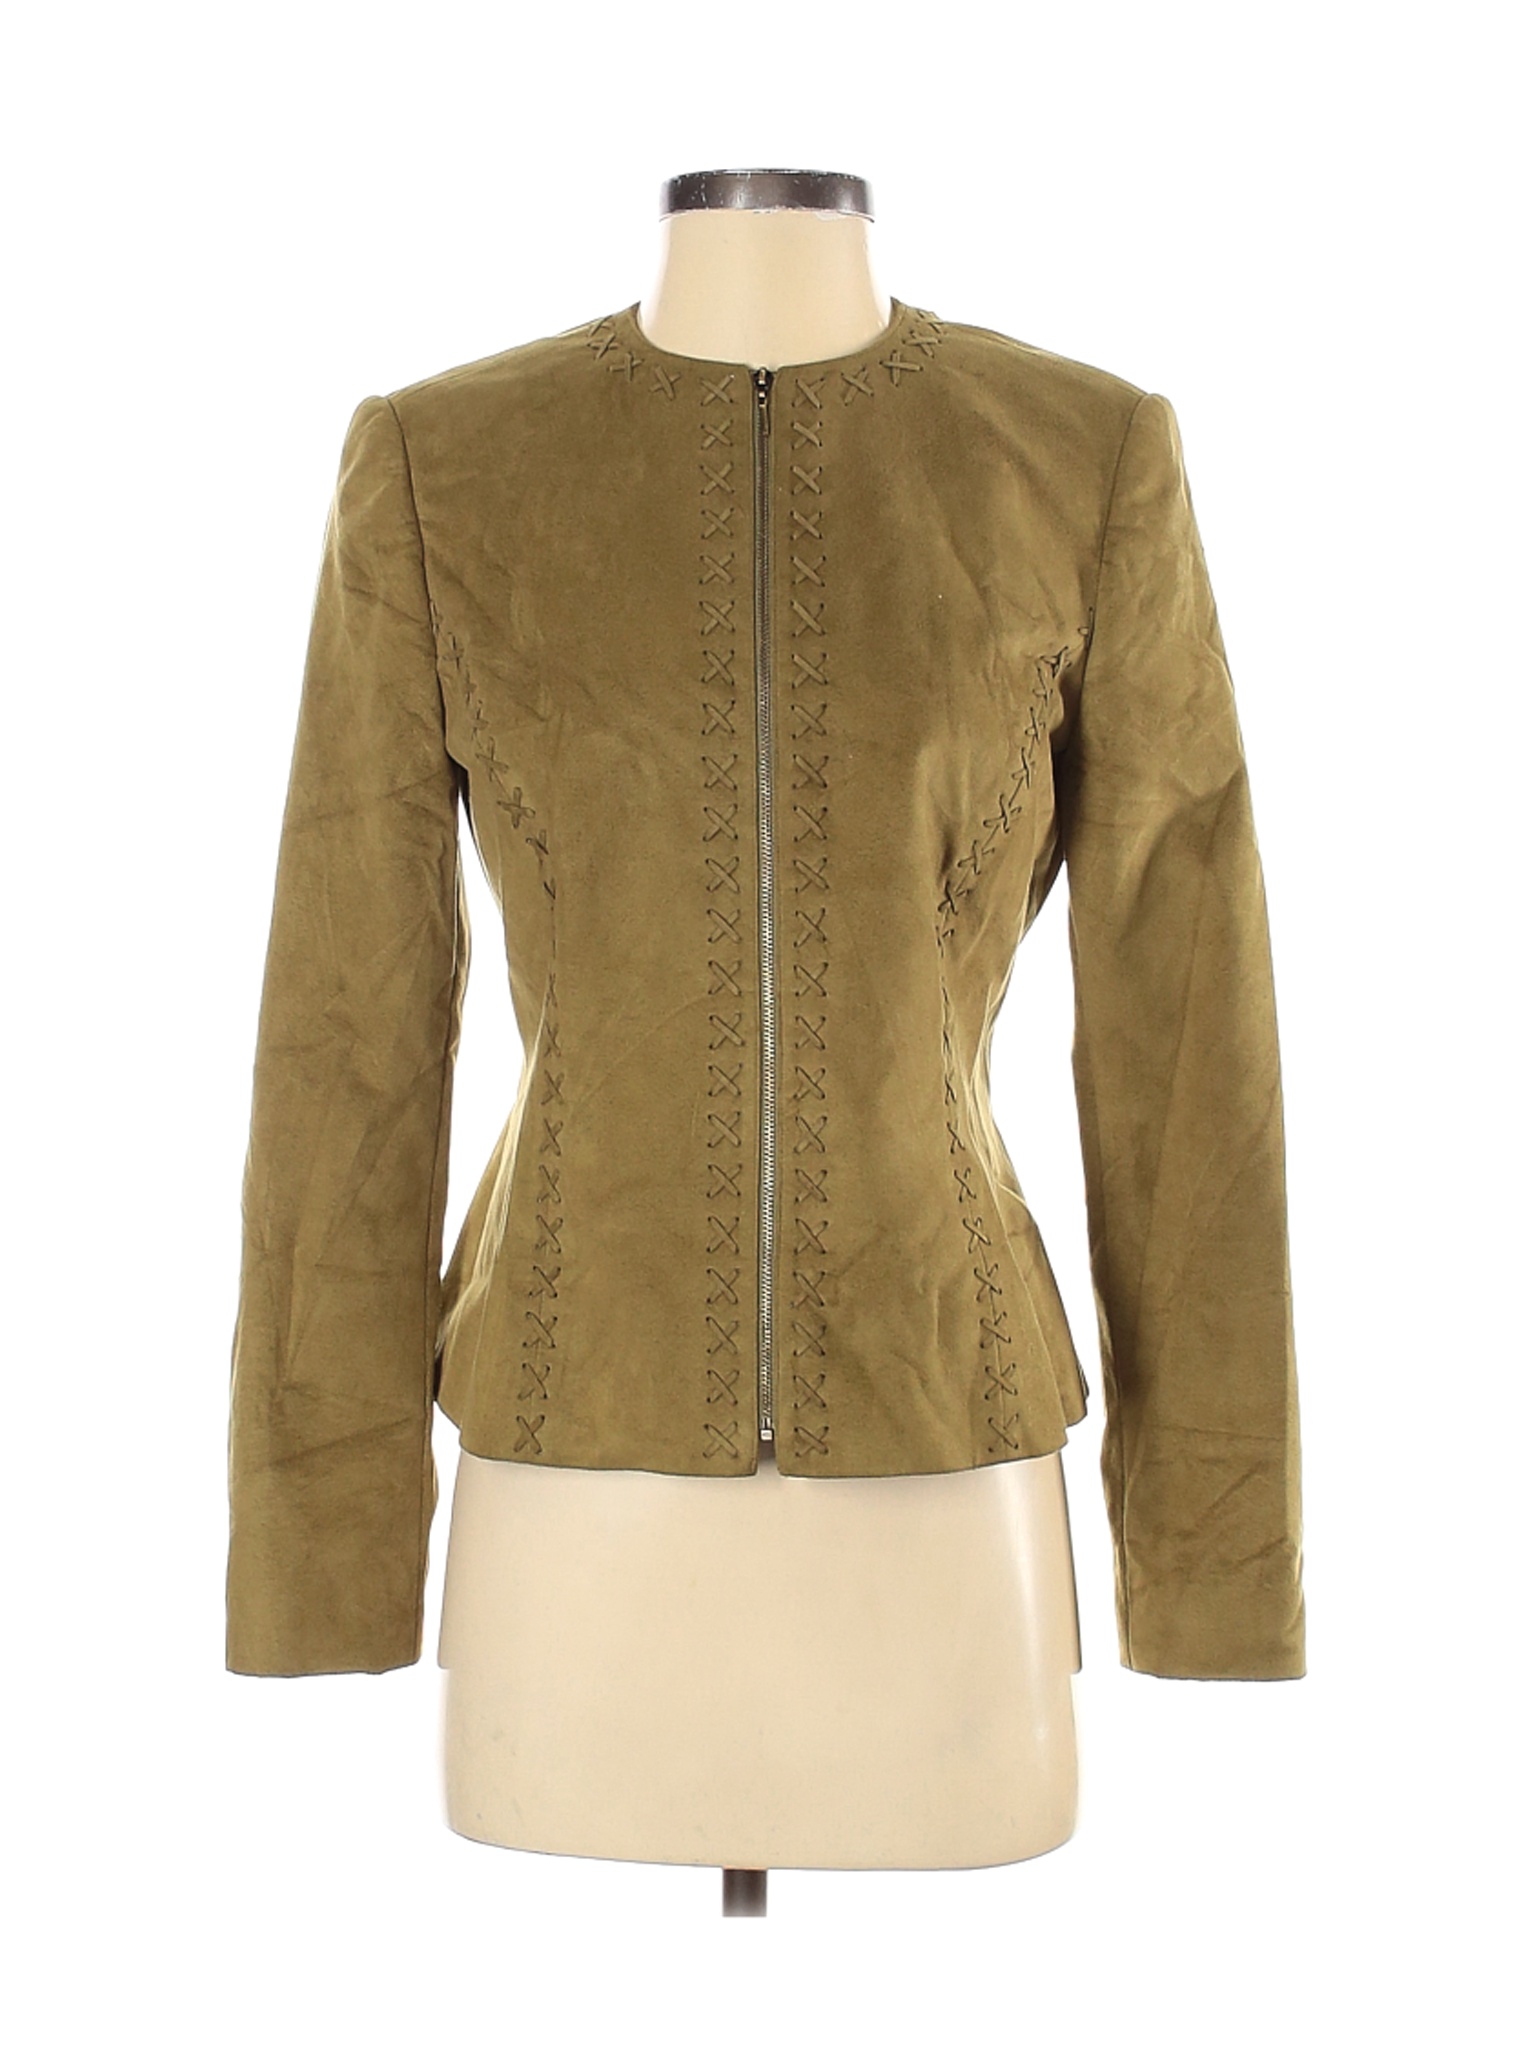 Carlisle Women Green Faux Leather Jacket 0 | eBay